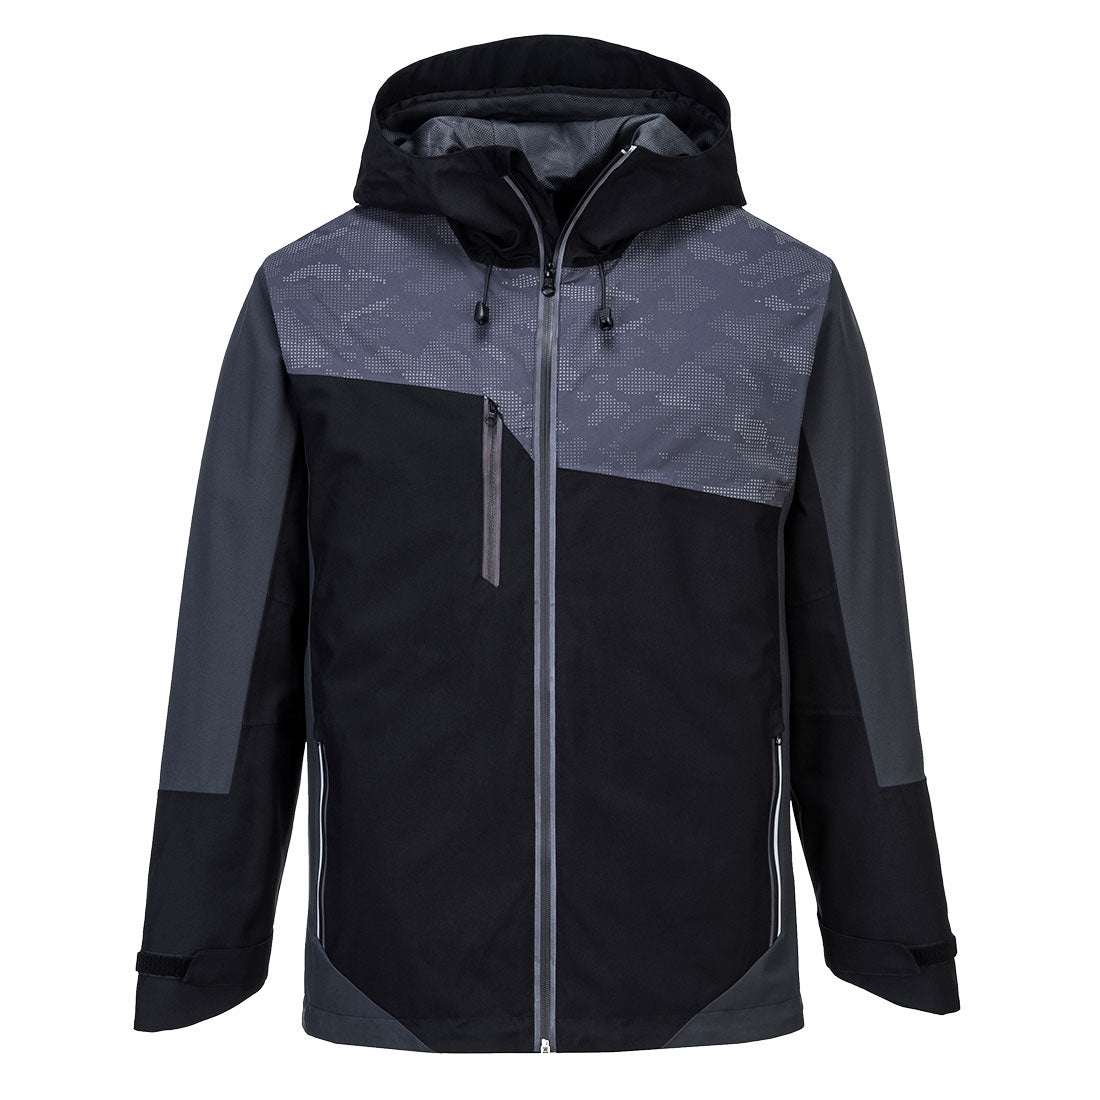 Portwest S601 Reflective Shell Jacket 1#colour_black-grey 2#colour_black-grey